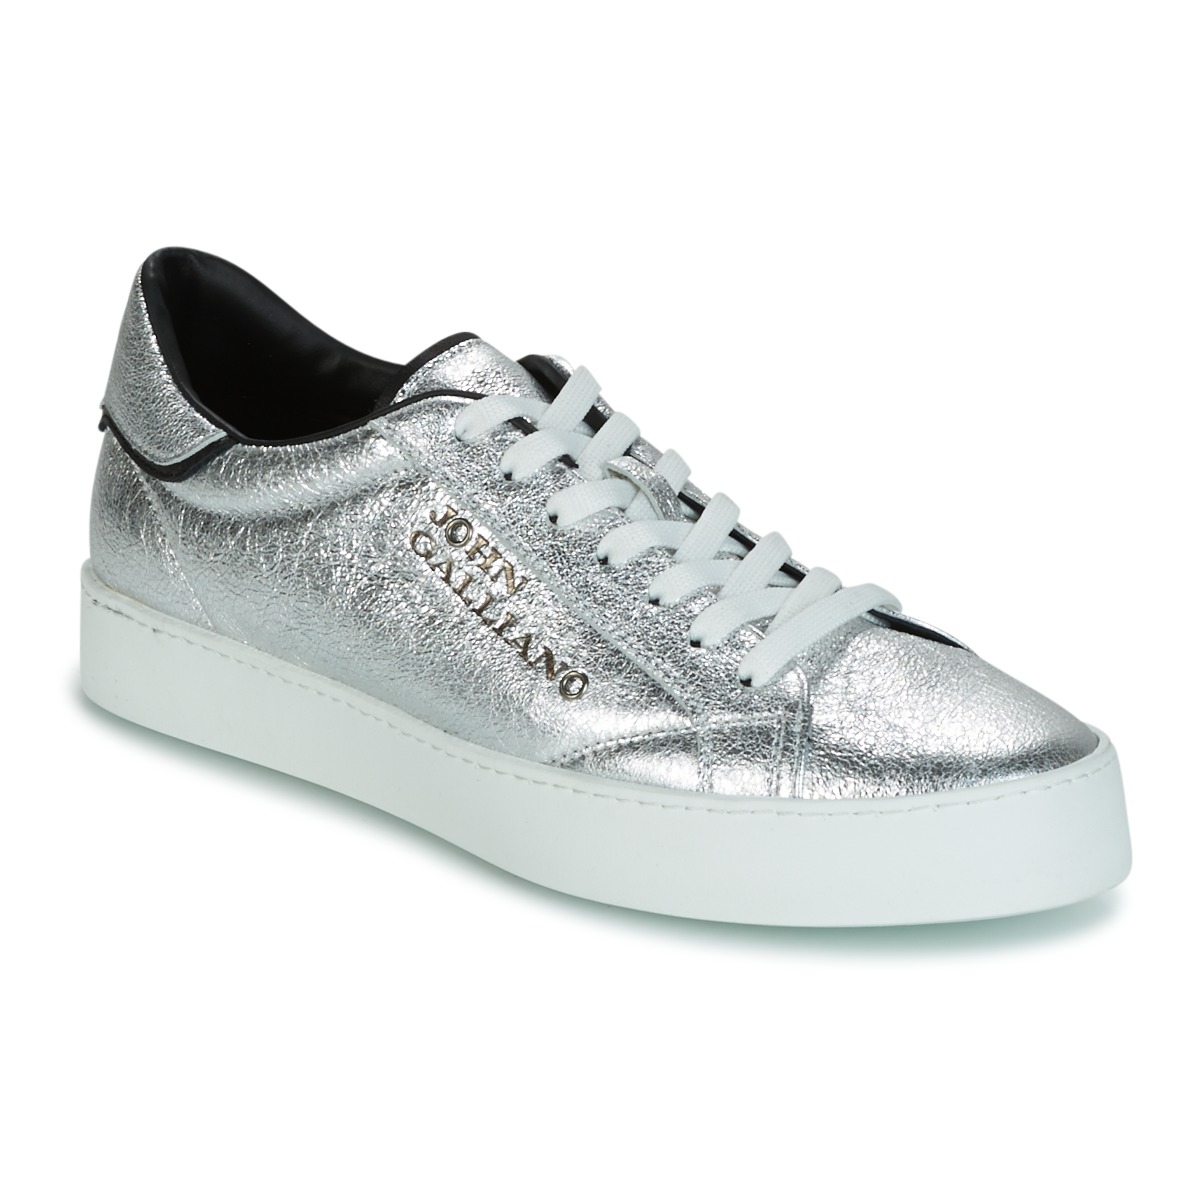 john galliano  fiur  men's shoes (trainers) in silver